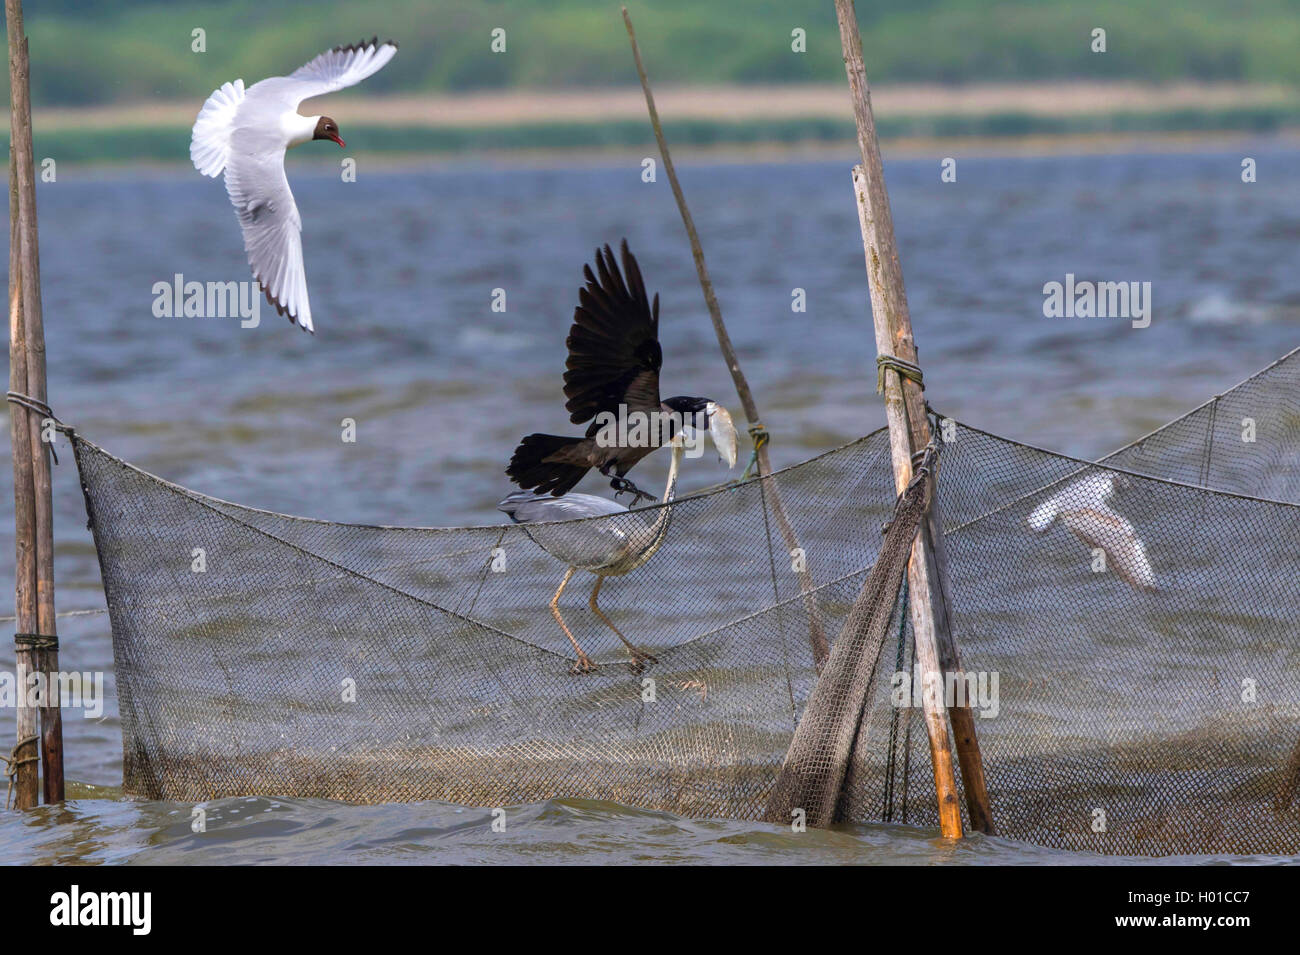 Hooded crow (Corvus corone cornix, Corvus cornix), hooded crow and grwey heron on a fishing net, Germany, Mecklenburg-Western Pomerania, Malchiner See Stock Photo